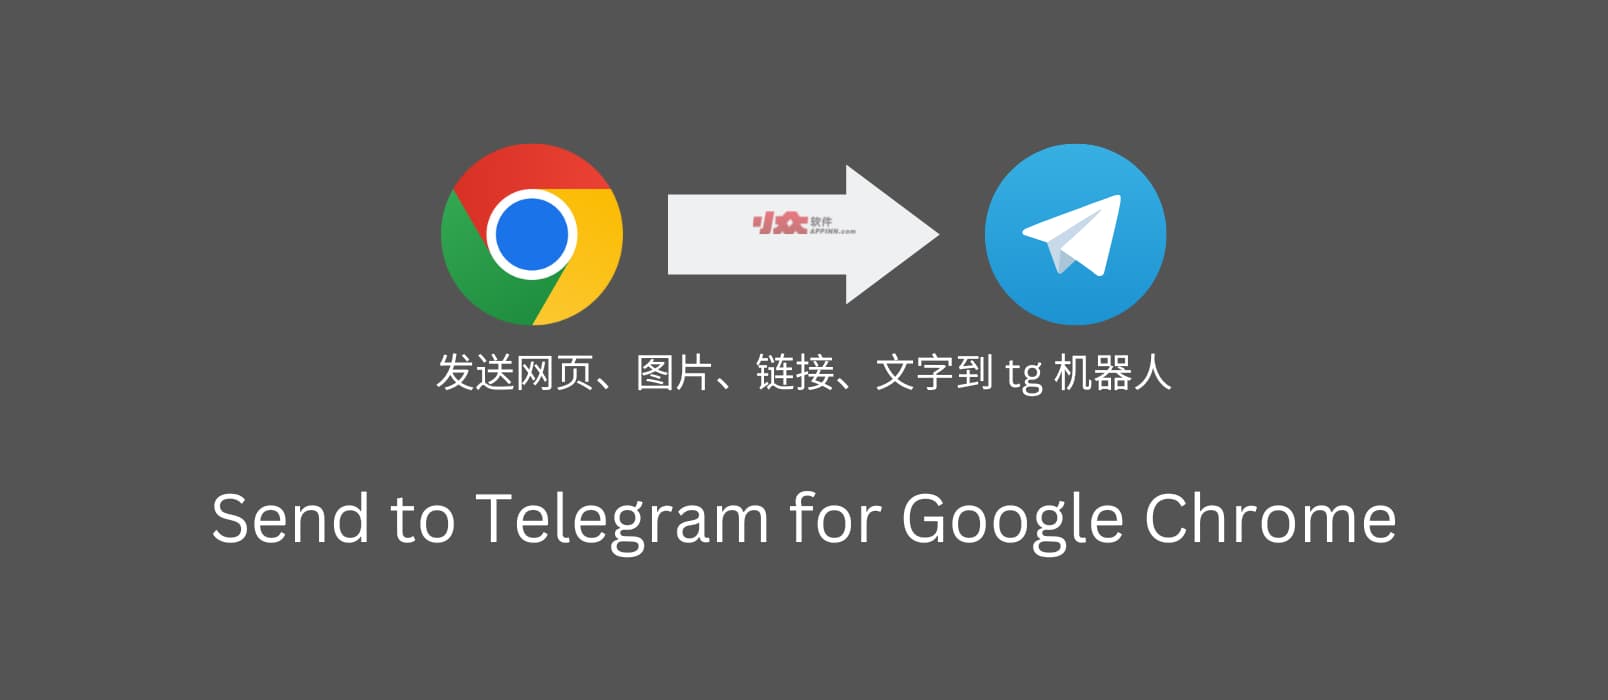 Send to Telegram for Google Chrome - 发送网页、图片、链接、文字到 tg 机器人